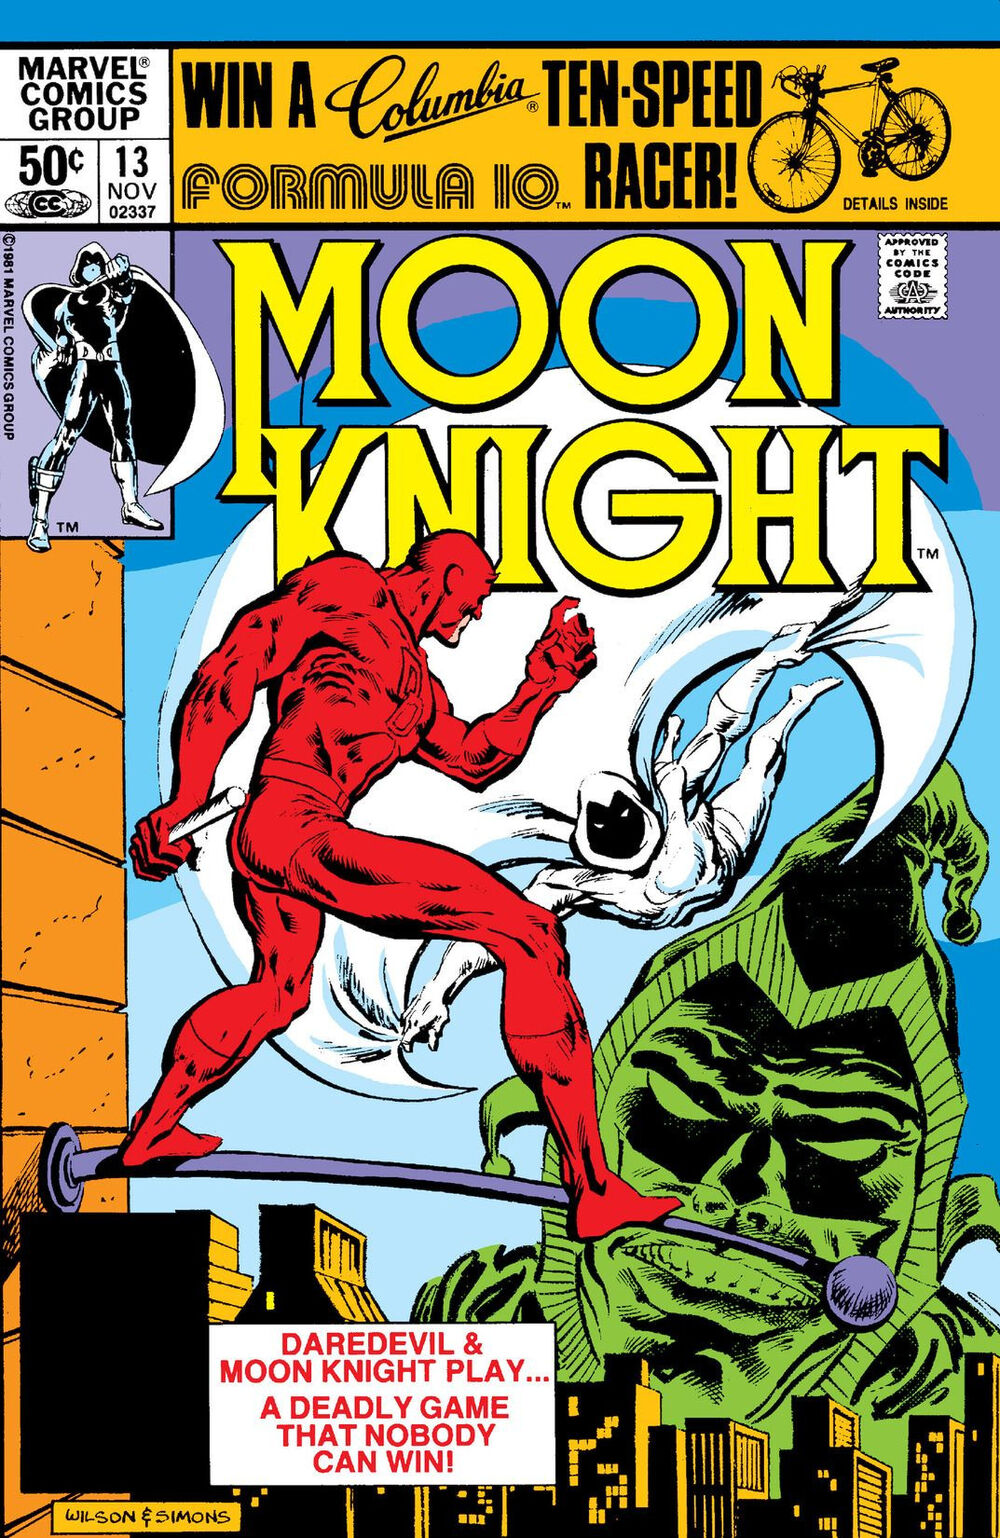 Moon Knight Volume 1 #13 News Stand